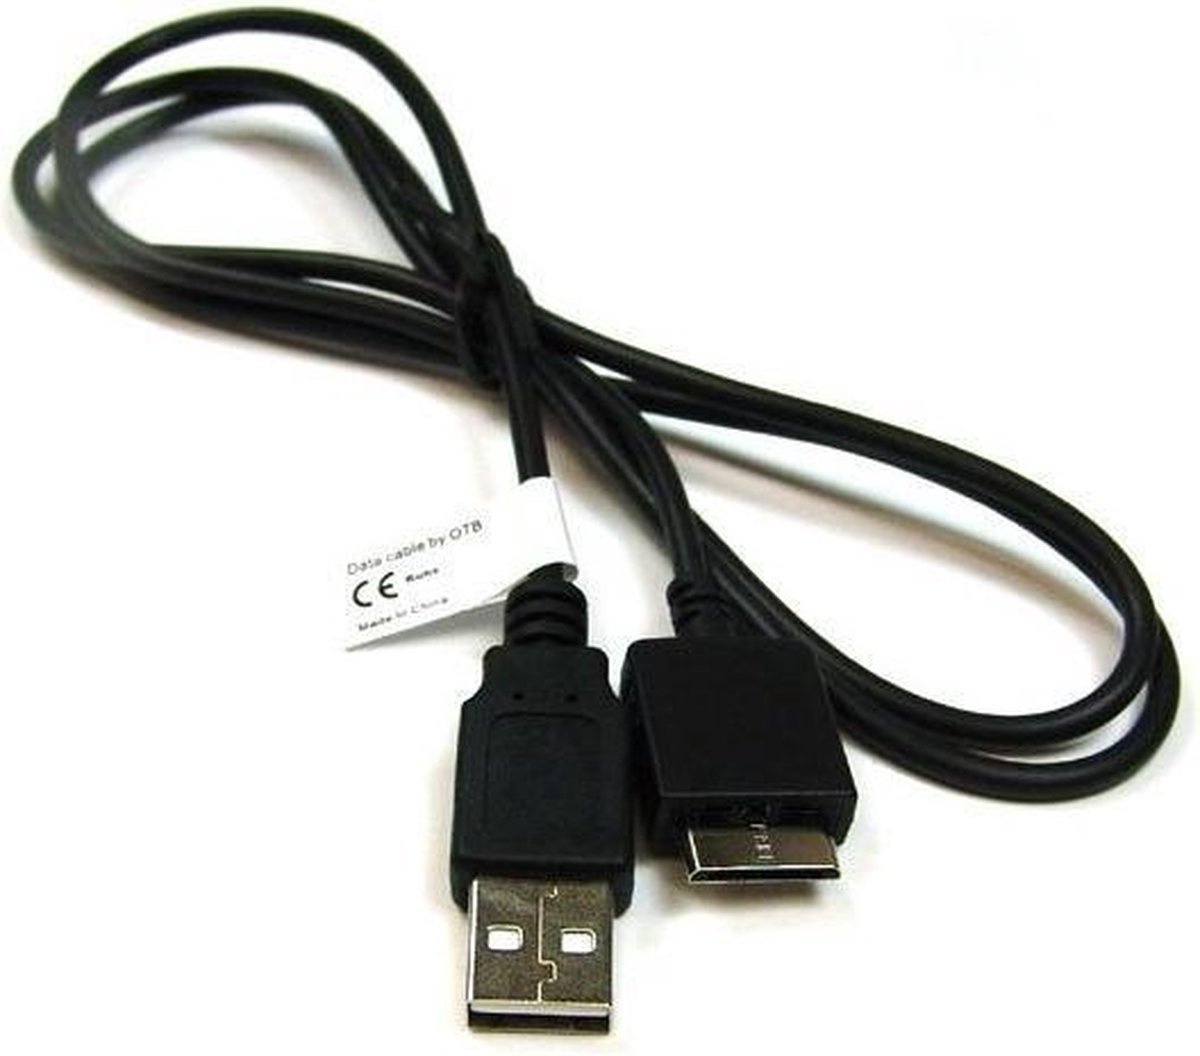 USB kabel voor Sony Portable Media / Mp3 WM Port - 1 meter | bol.com